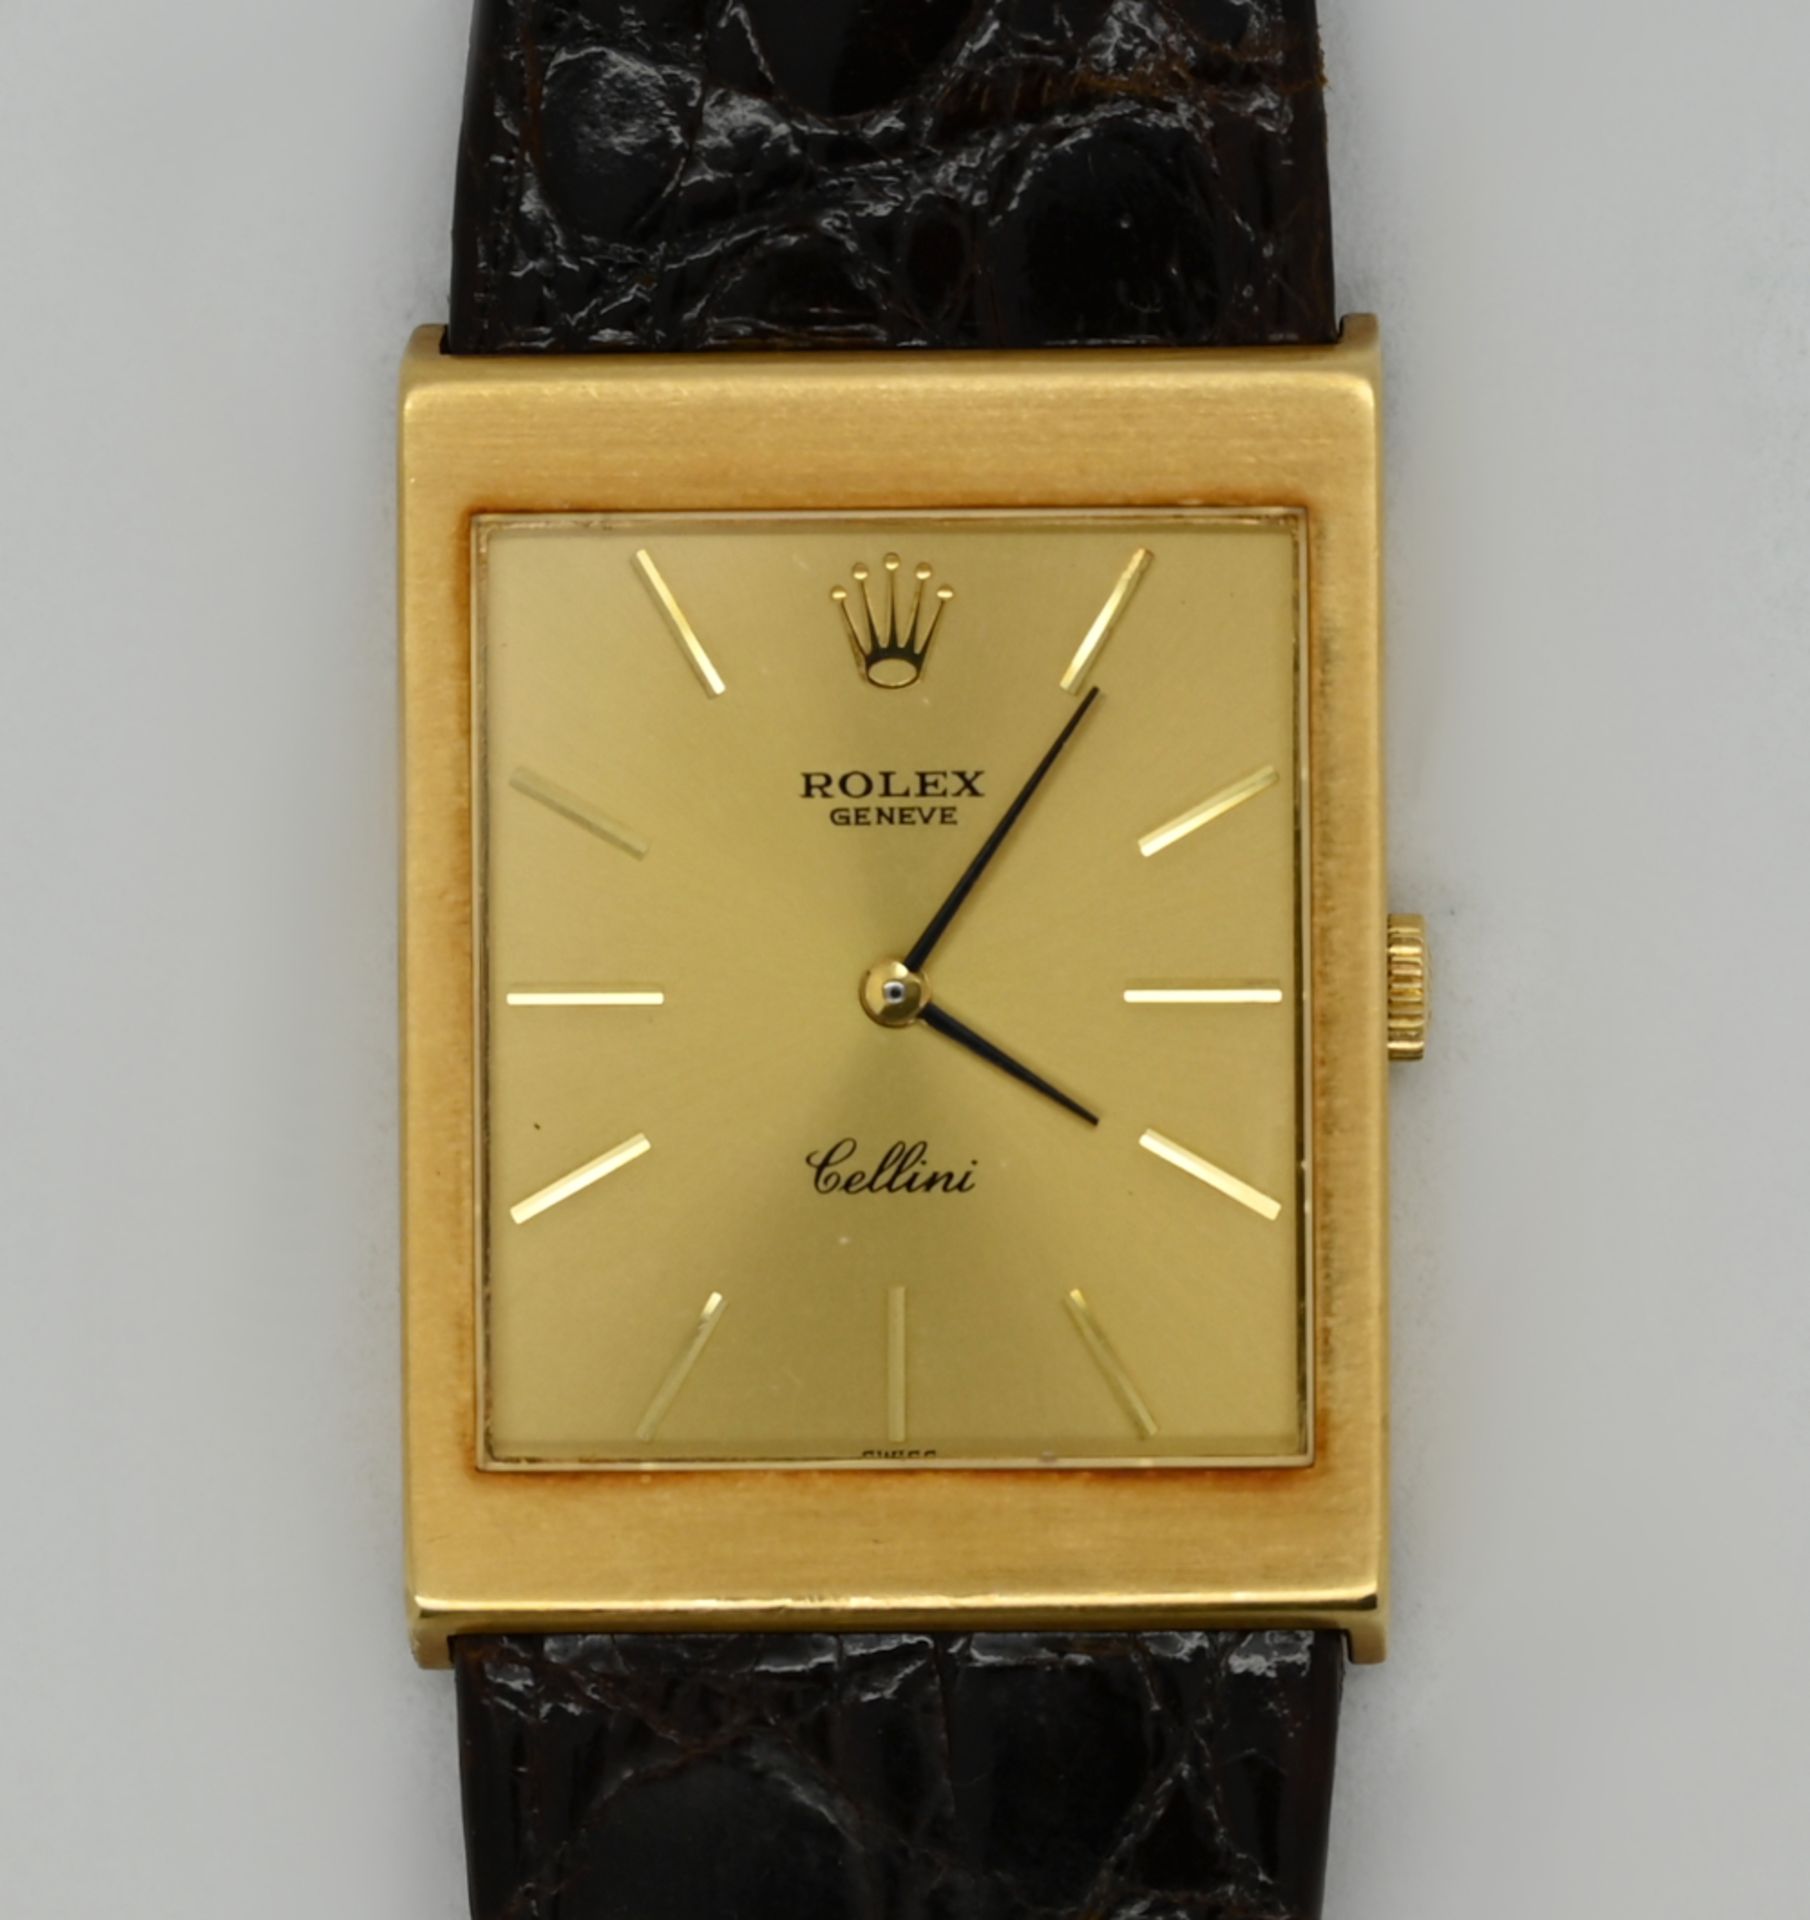 1 Armbanduhr ROLEX Cellini GG 18ct. mit Lederband (wohl ergänzt), Handaufzug (Uhr läuft an) Asp./ Gs - Bild 2 aus 2